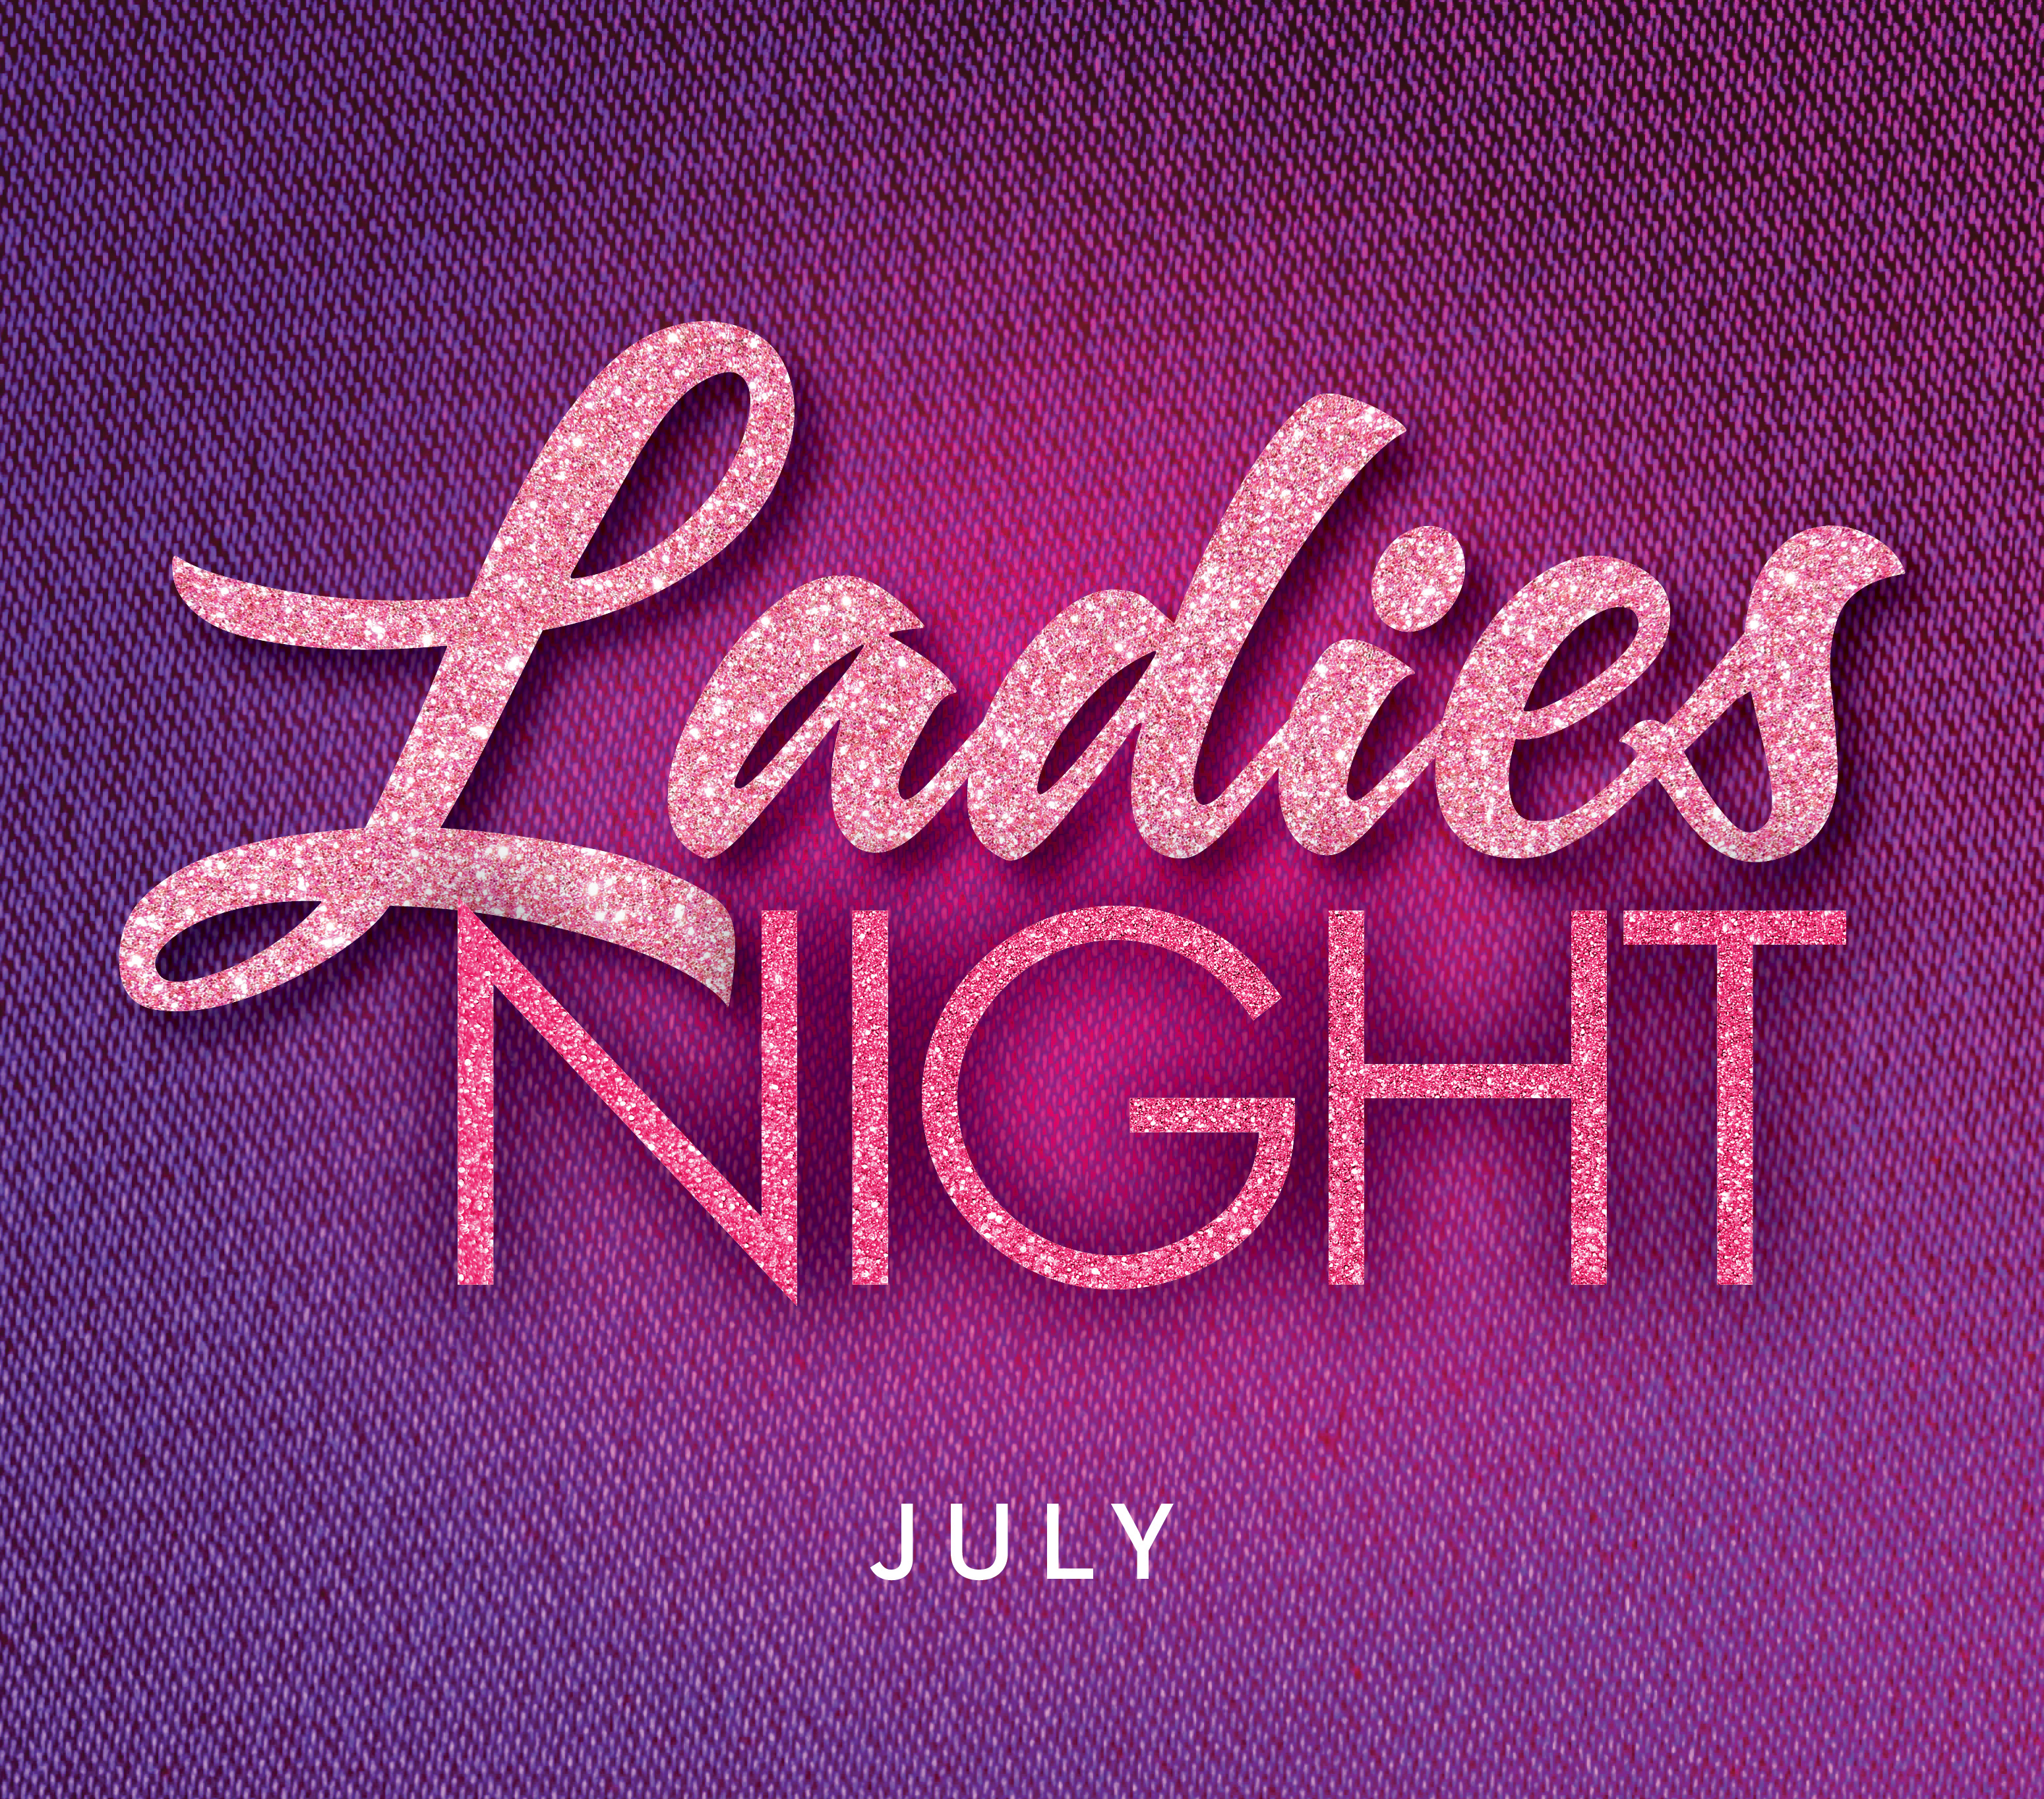 Ladies Night July